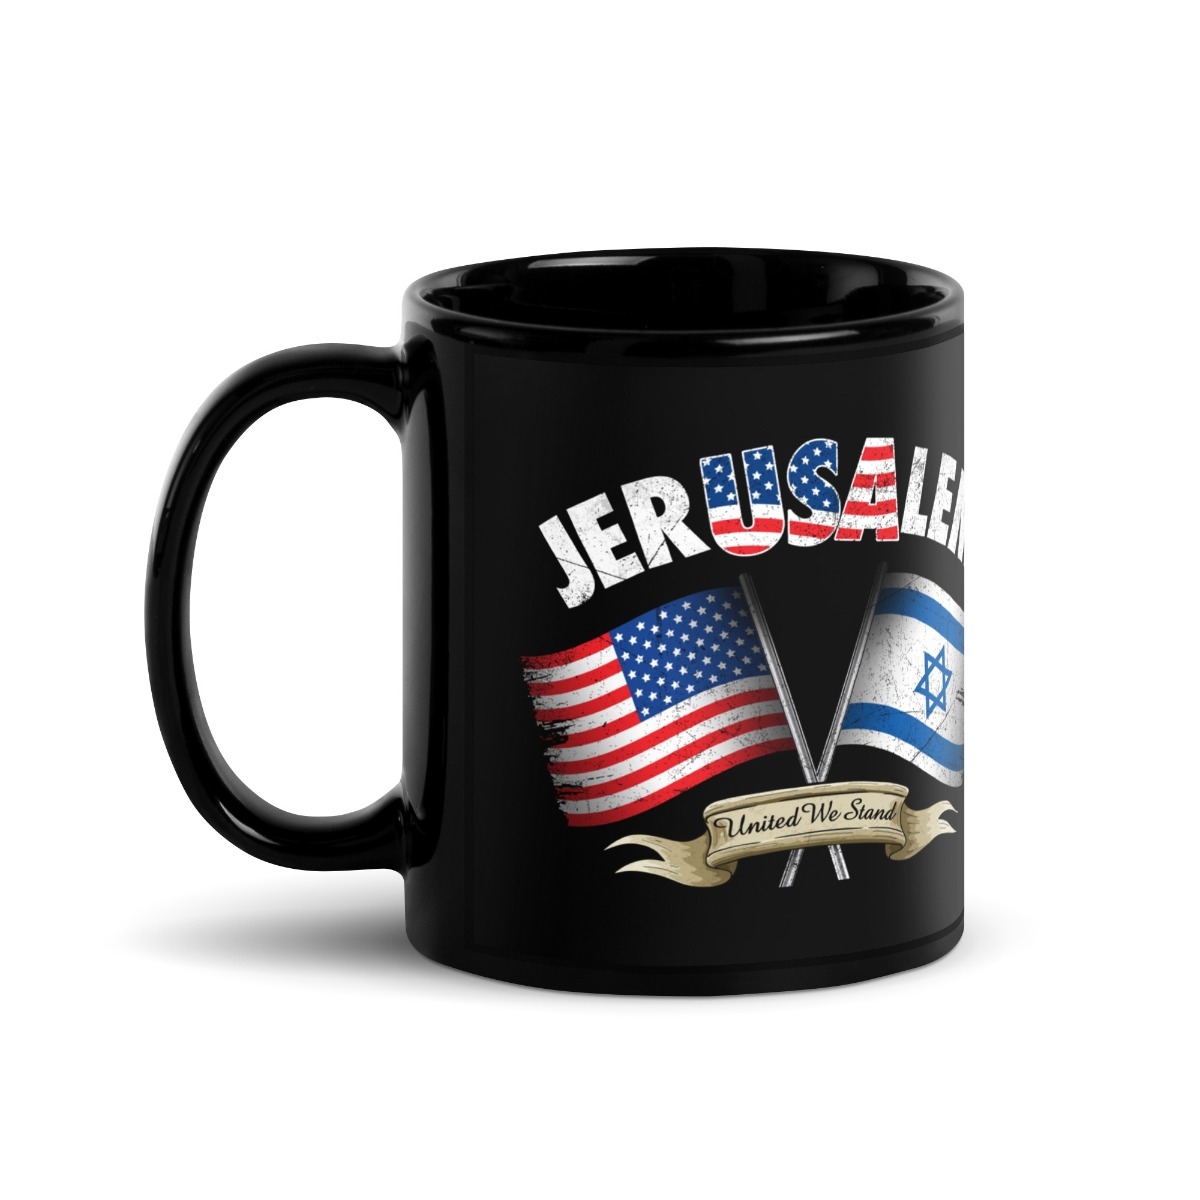 Jerusalem and USA - United We Stand Glossy Black Mug - 1